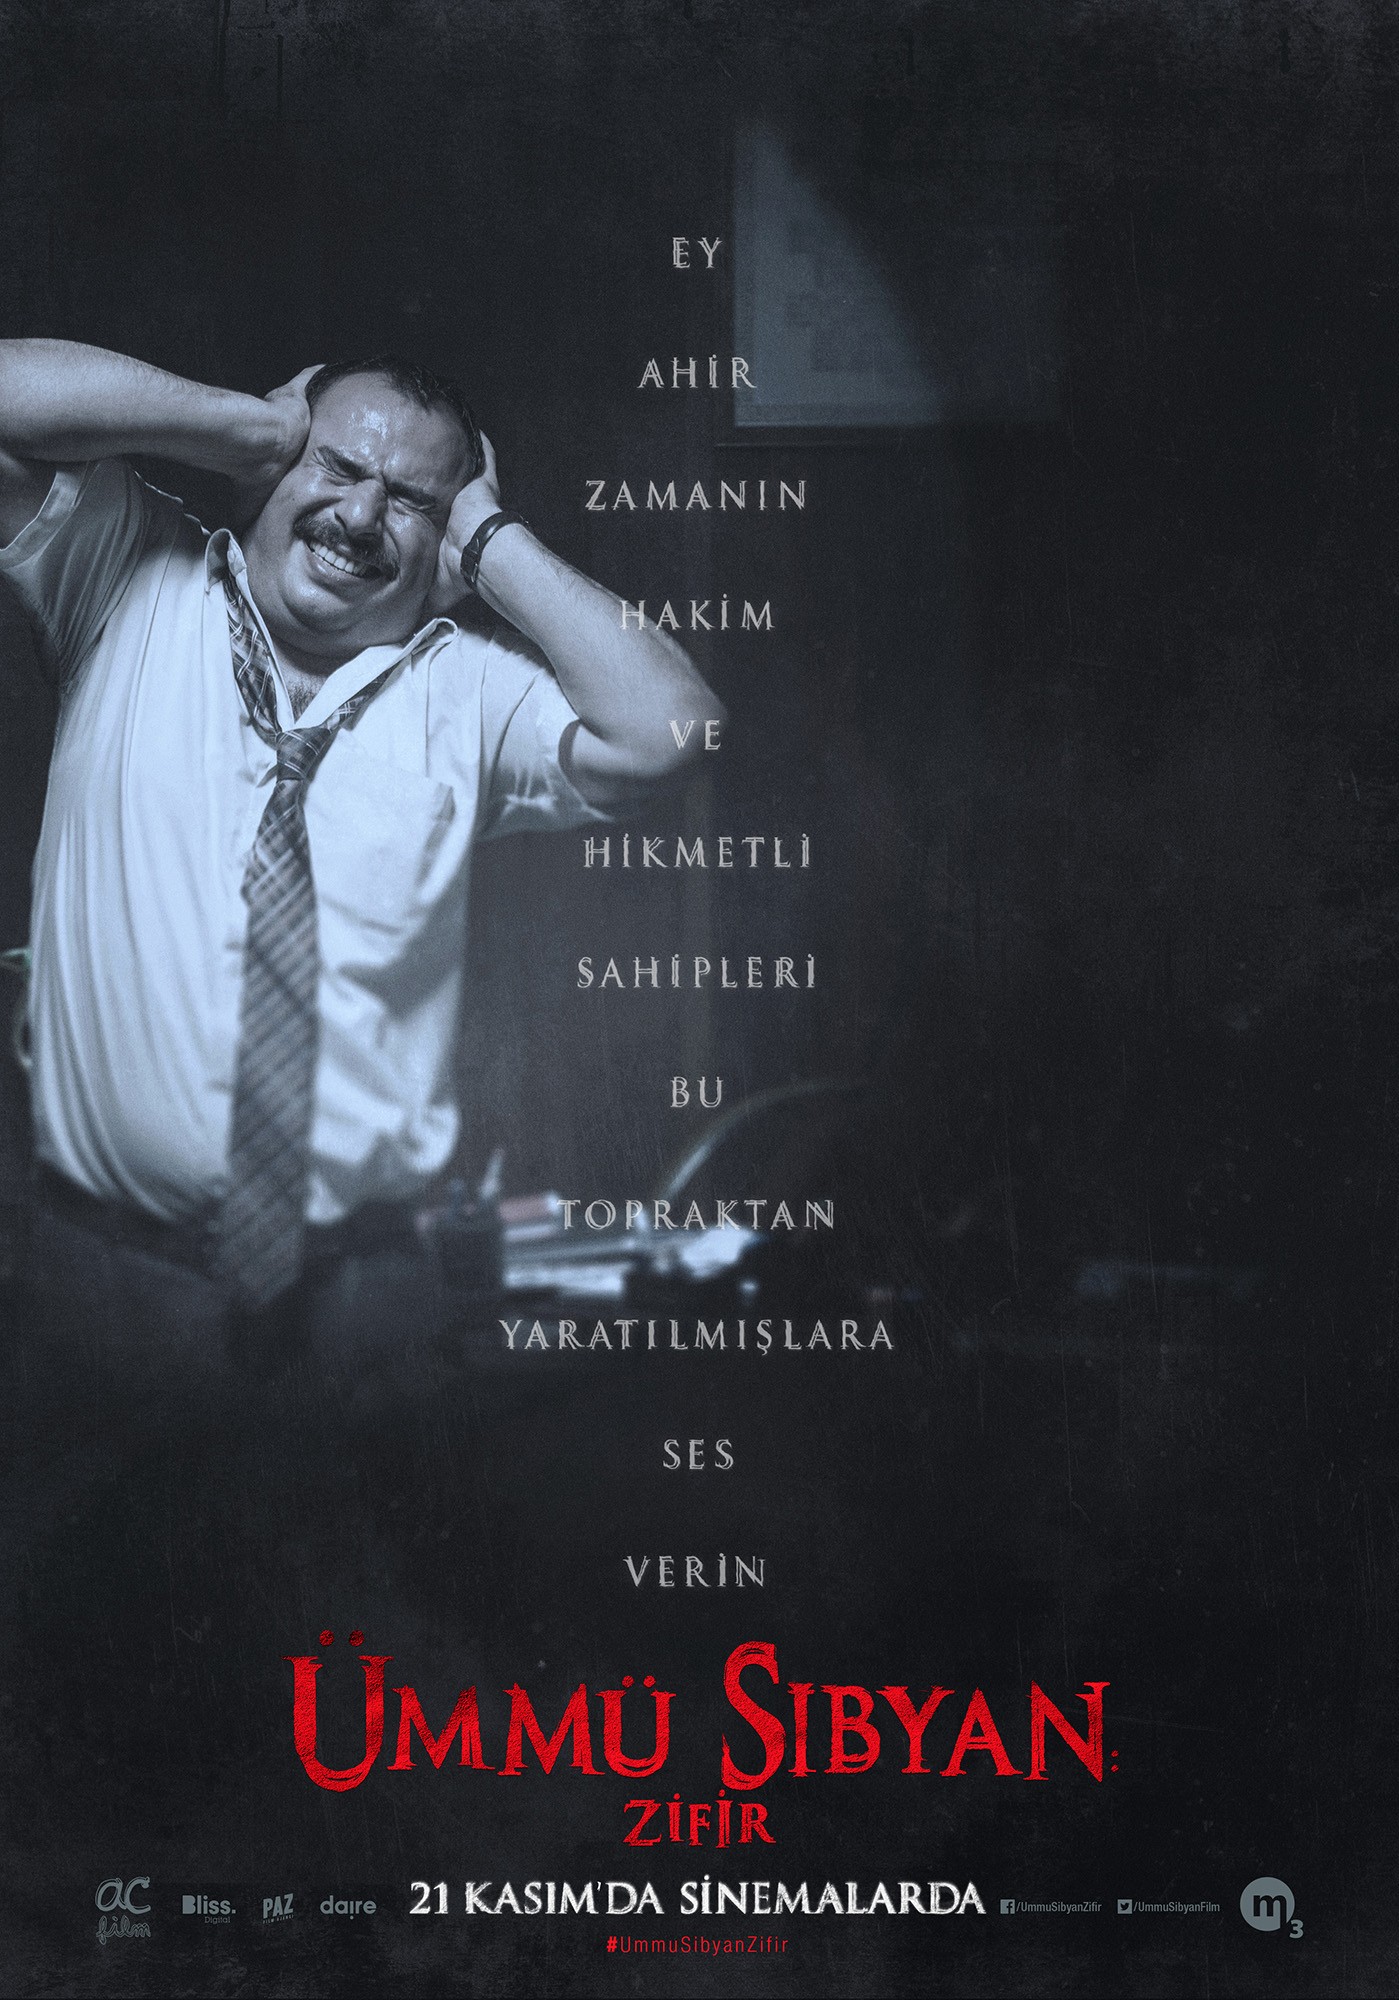 Mega Sized Movie Poster Image for Ümmü Sıbyan Zifir (#11 of 12)